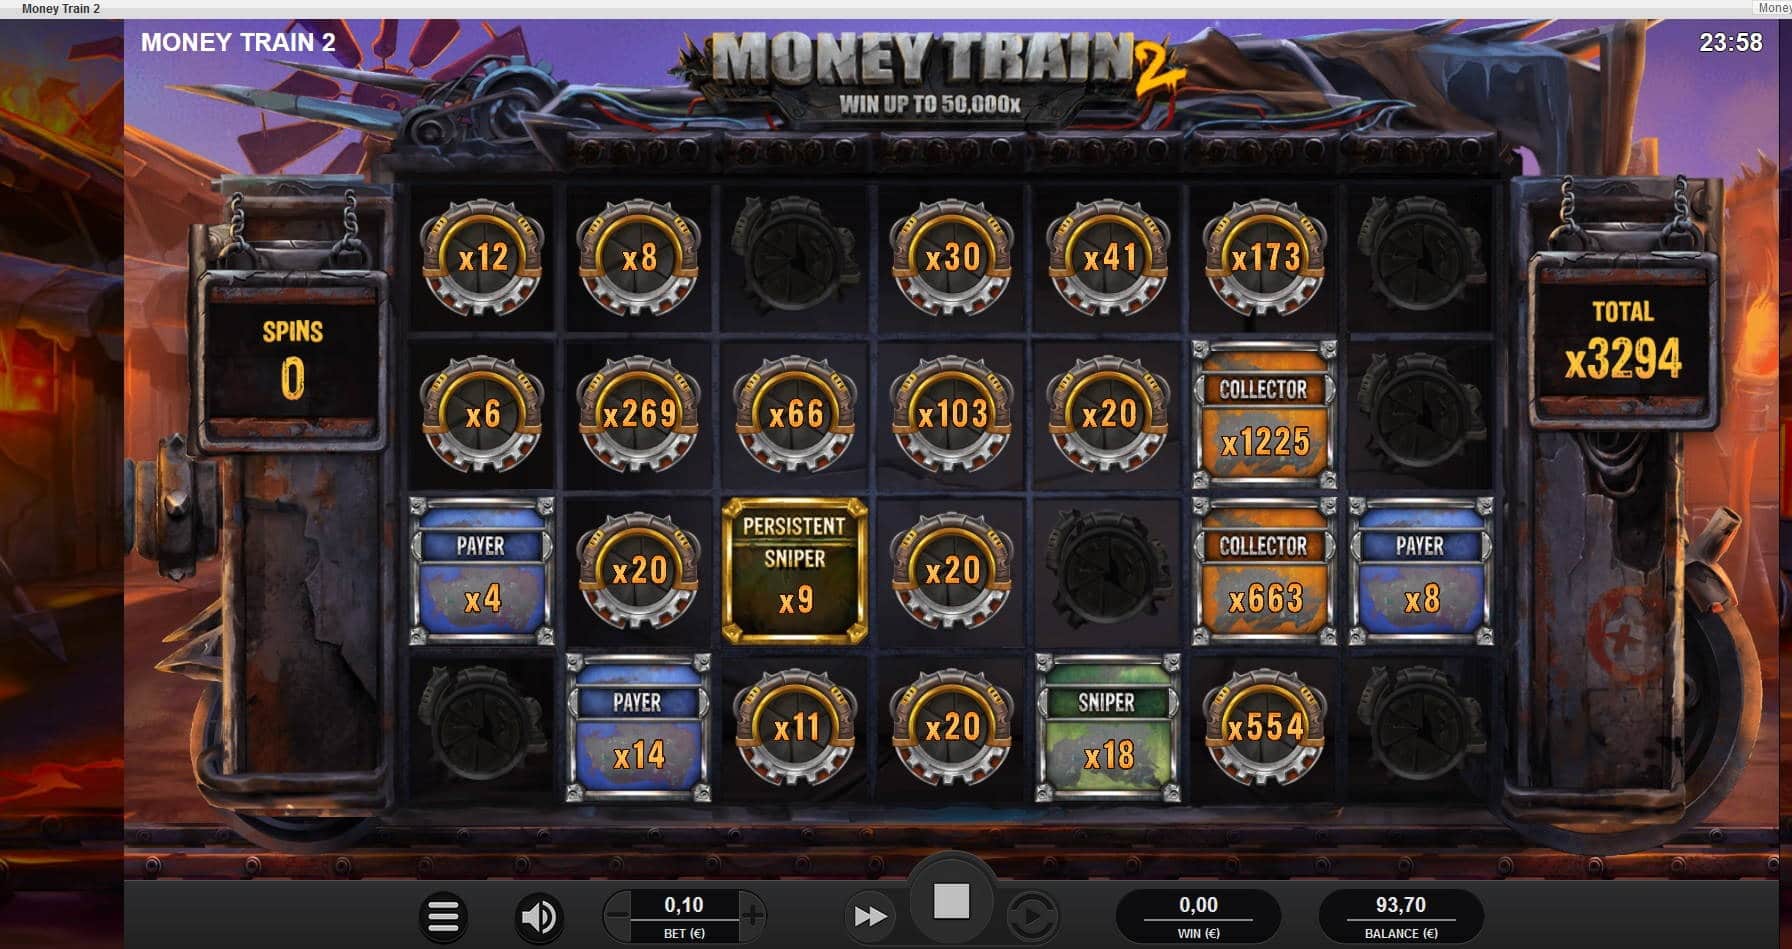 Moneytrain 2 Casino win picture by MrMork 14.9.2020 329.40ee 3294X